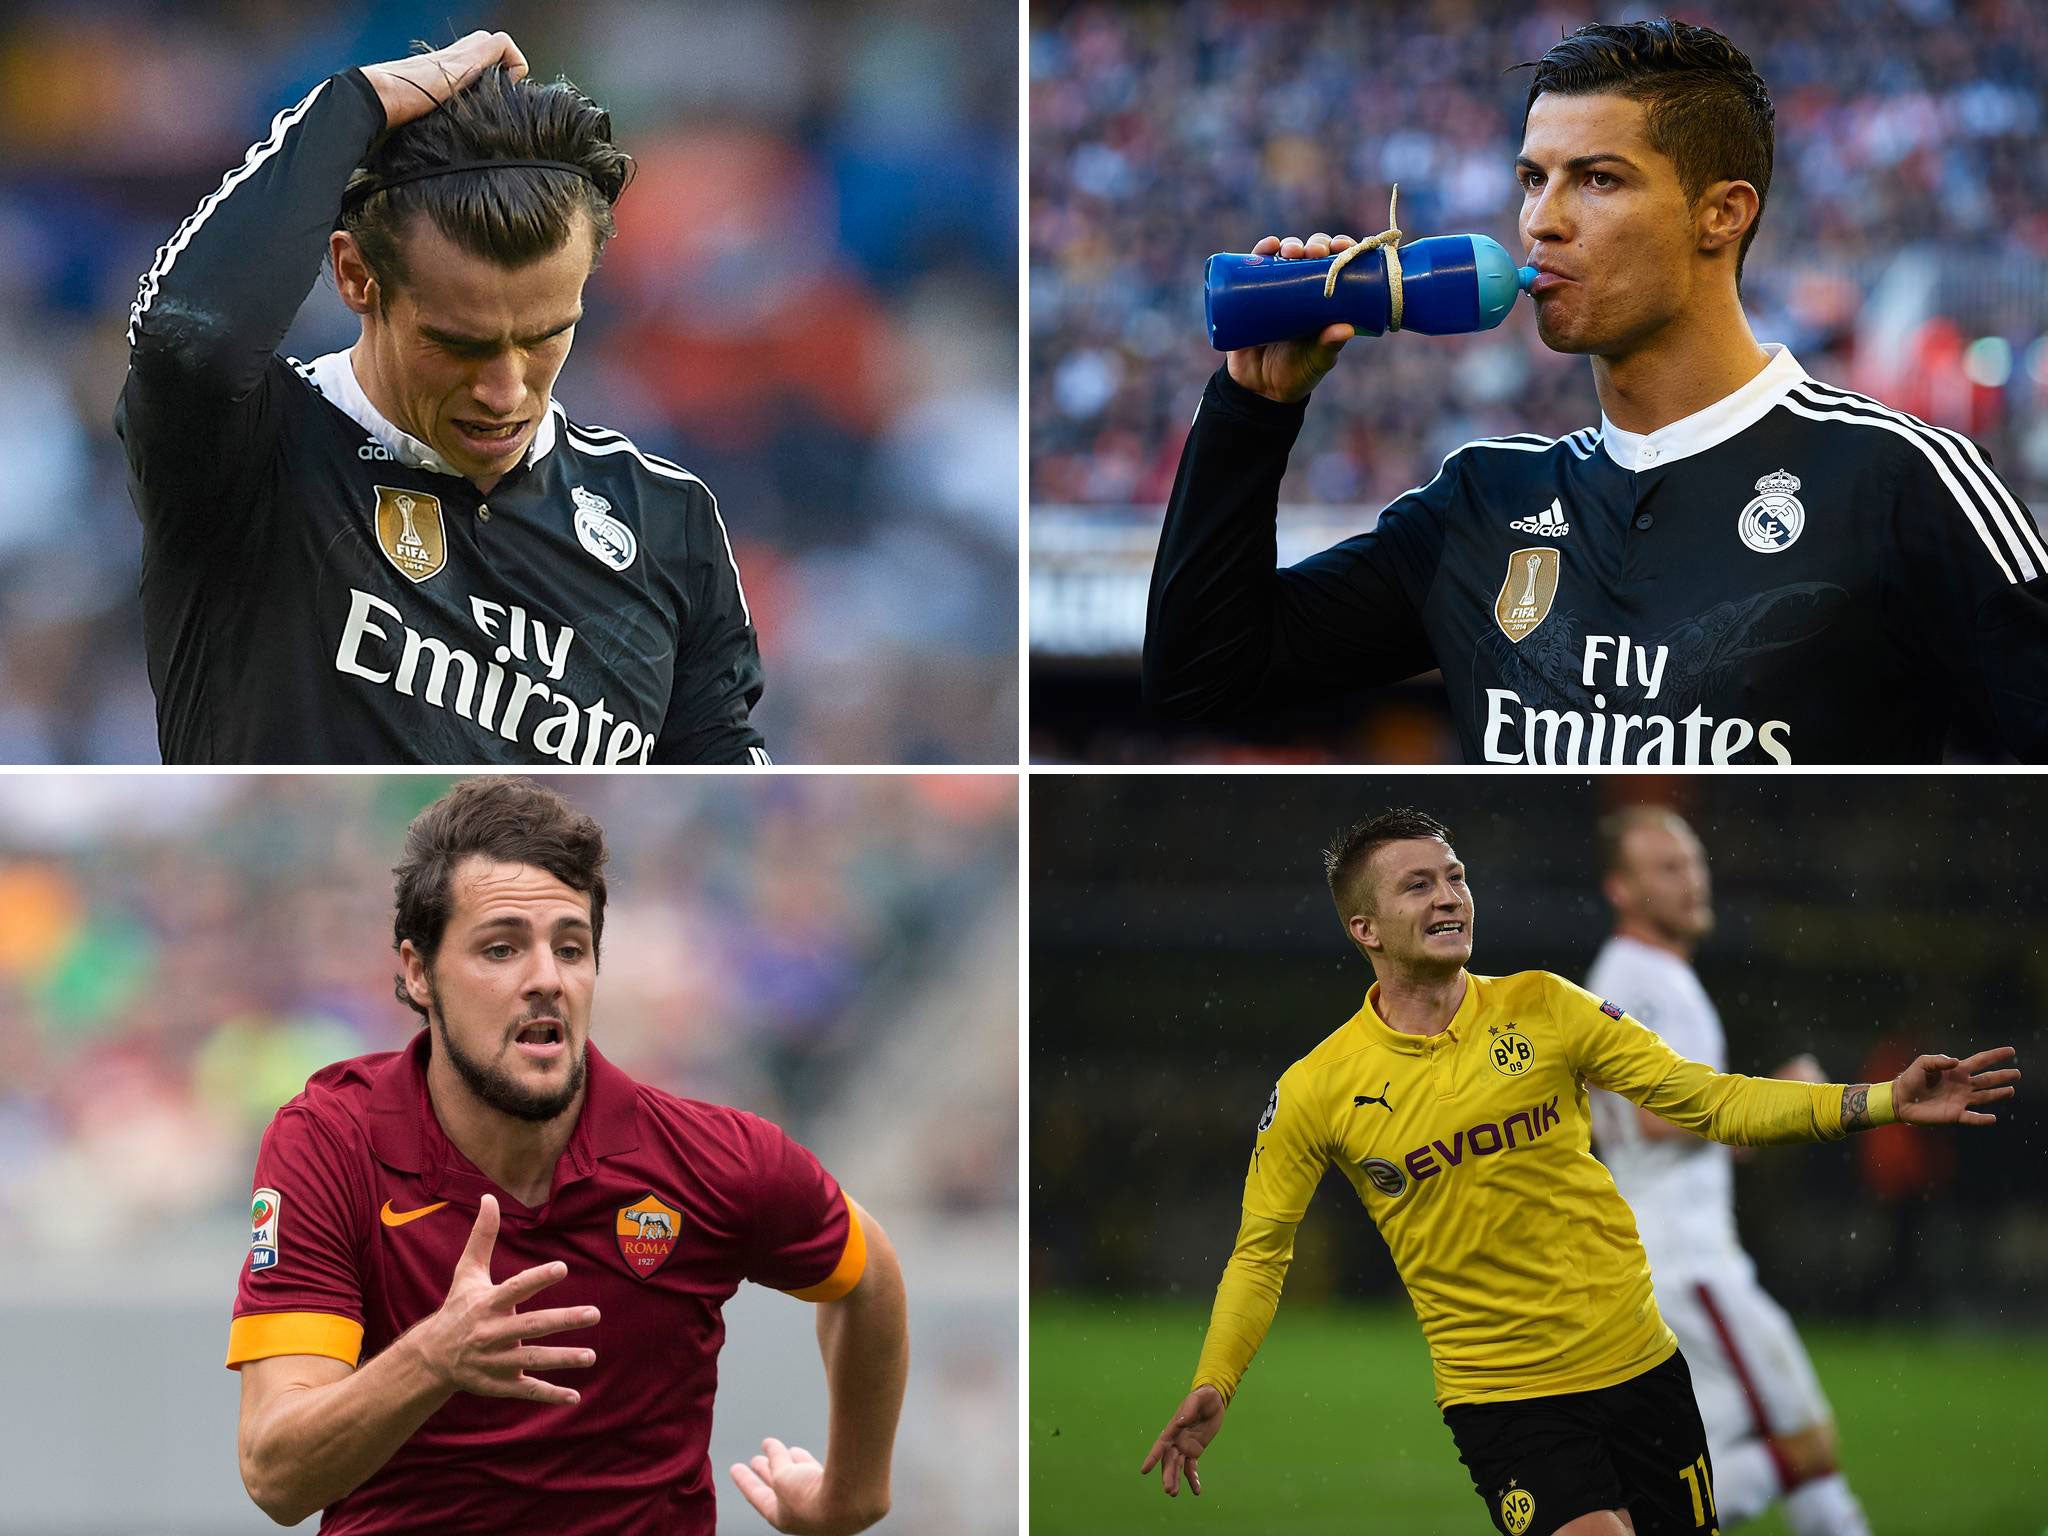 Gareth Bale, Cristiano Ronaldo, Mattia Destro and Marco Reus